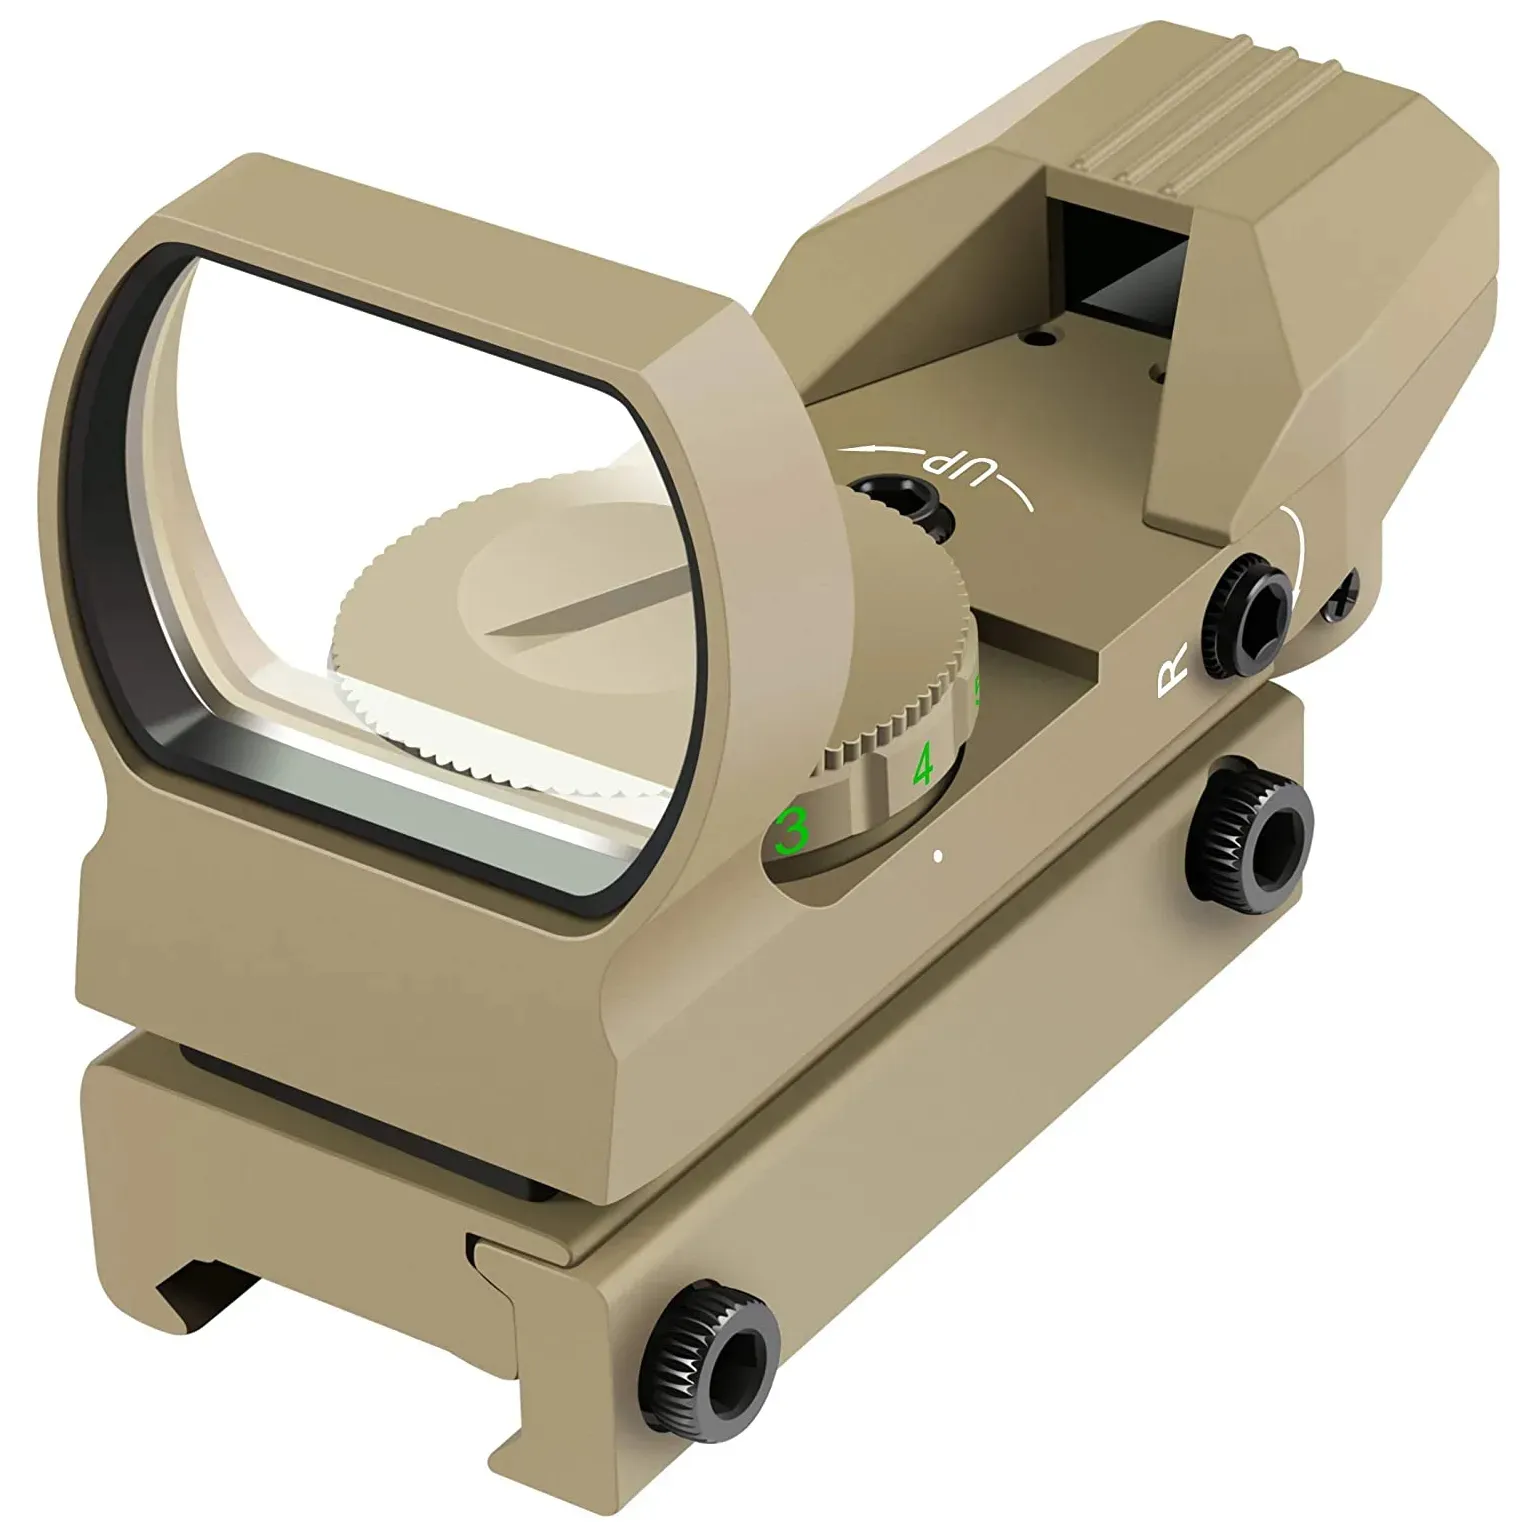 Tactical Riflescope Hunting Optics Rood Groen Geprojecteerd Dot Sight Reflex 4 Richtkruis Scope Collimator Sight voor 11mm/20mm Rail-Tan